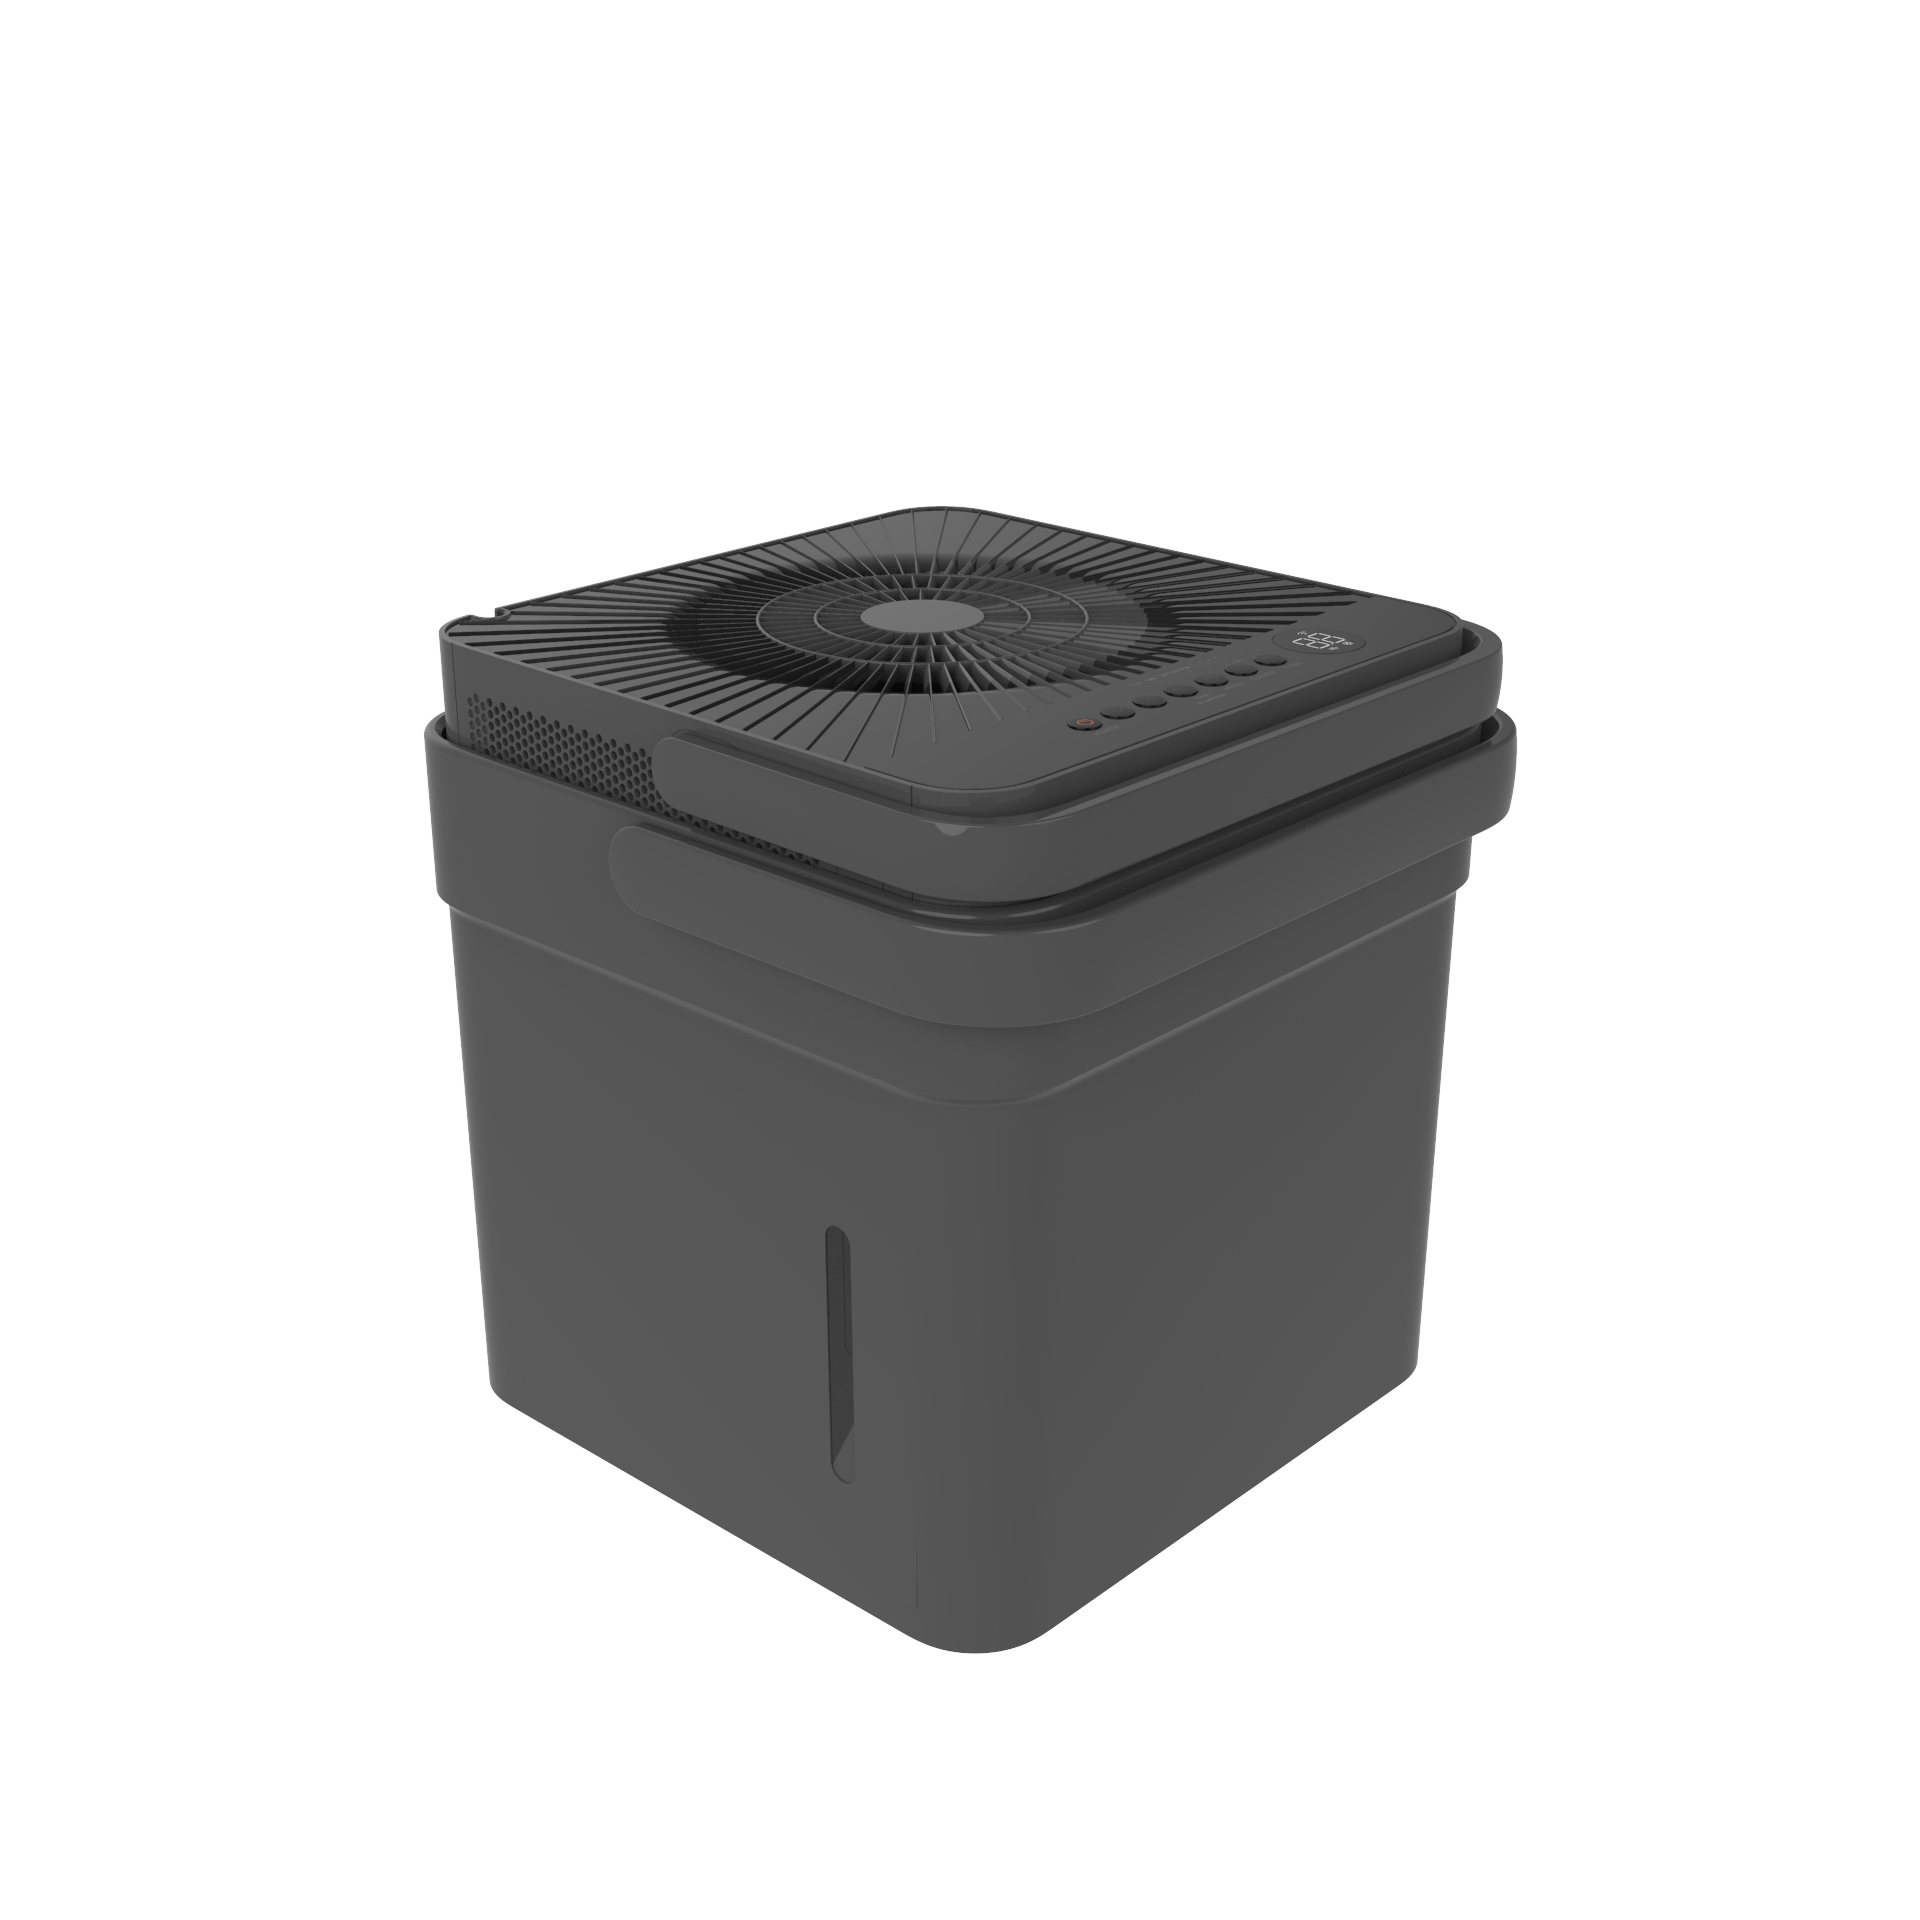 50 Pint Cube Smart Dehumidifier with Pump